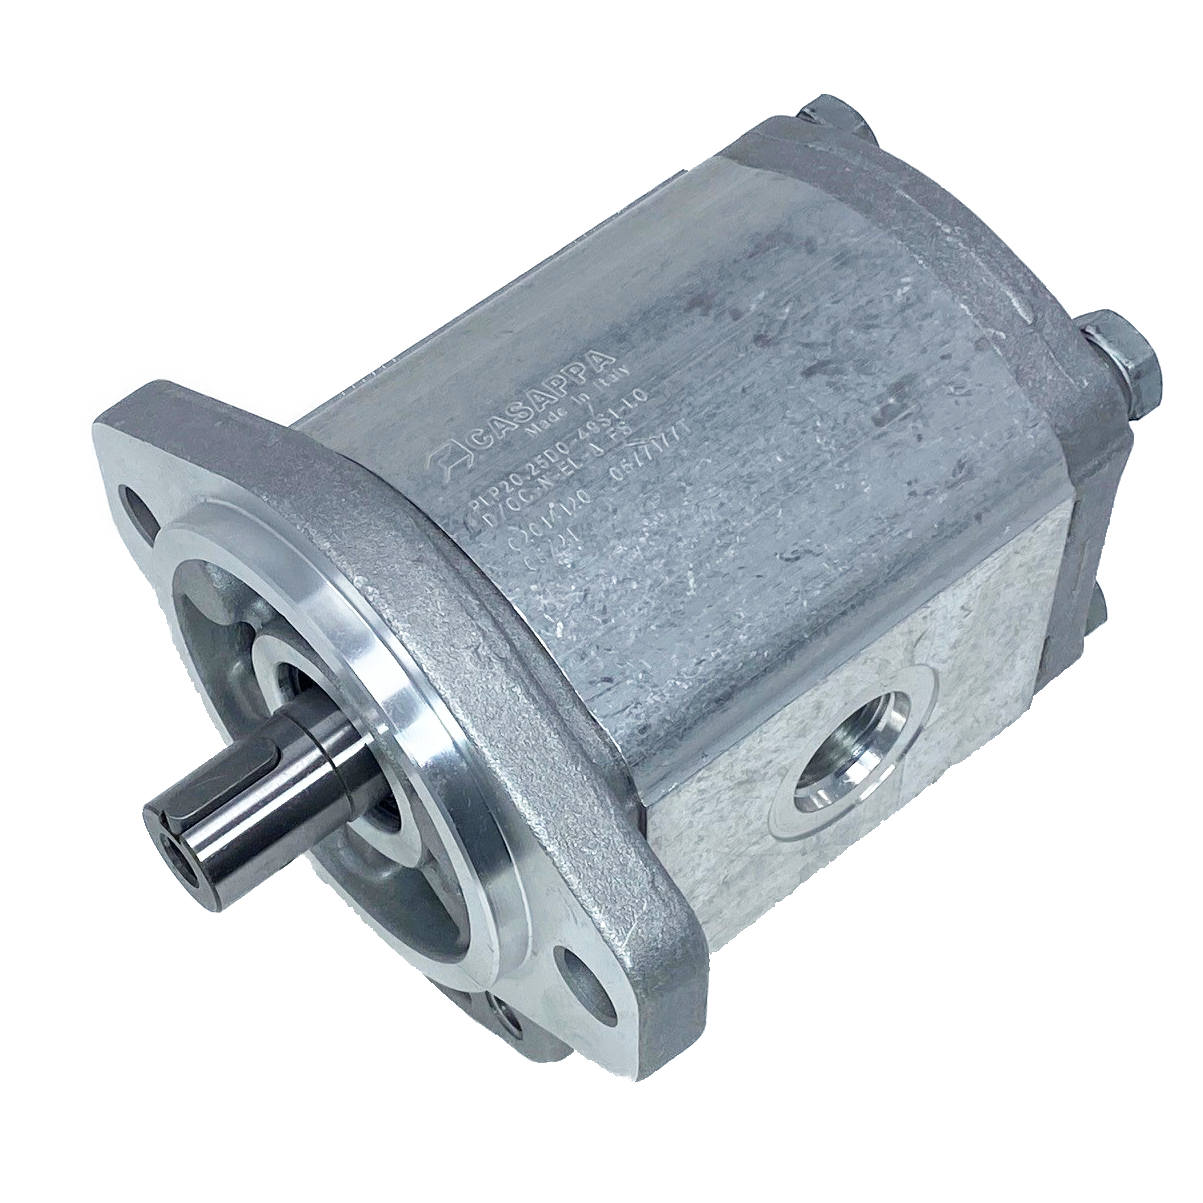 PLM20.25R0-50S1-LOC/OD-N-EL : Casappa Polaris Gear Motor, 26.42cc, 2465psi Rated, 3045RPM, Reversible Rear External Drain, 3/4" Bore x 3/16" Key Shaft, SAE A 2-Bolt Flange, 0.625 (5/8") #10 SAE Inlet, 0.75 (3/4") #12 SAE Outlet, Aluminum Body & Flange